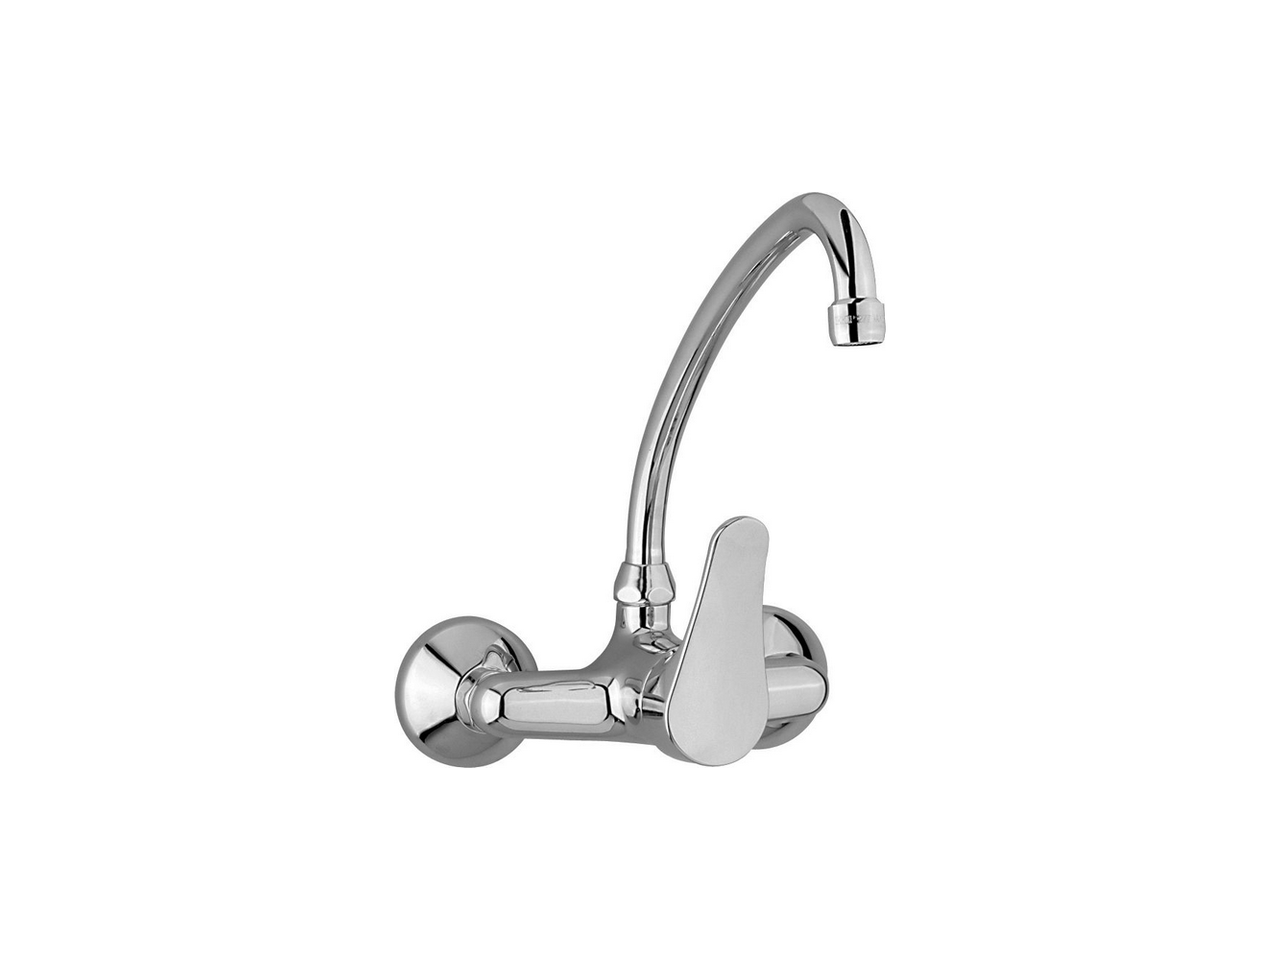 CisalExposed single lever sink mixer KITCHEN_FU000411